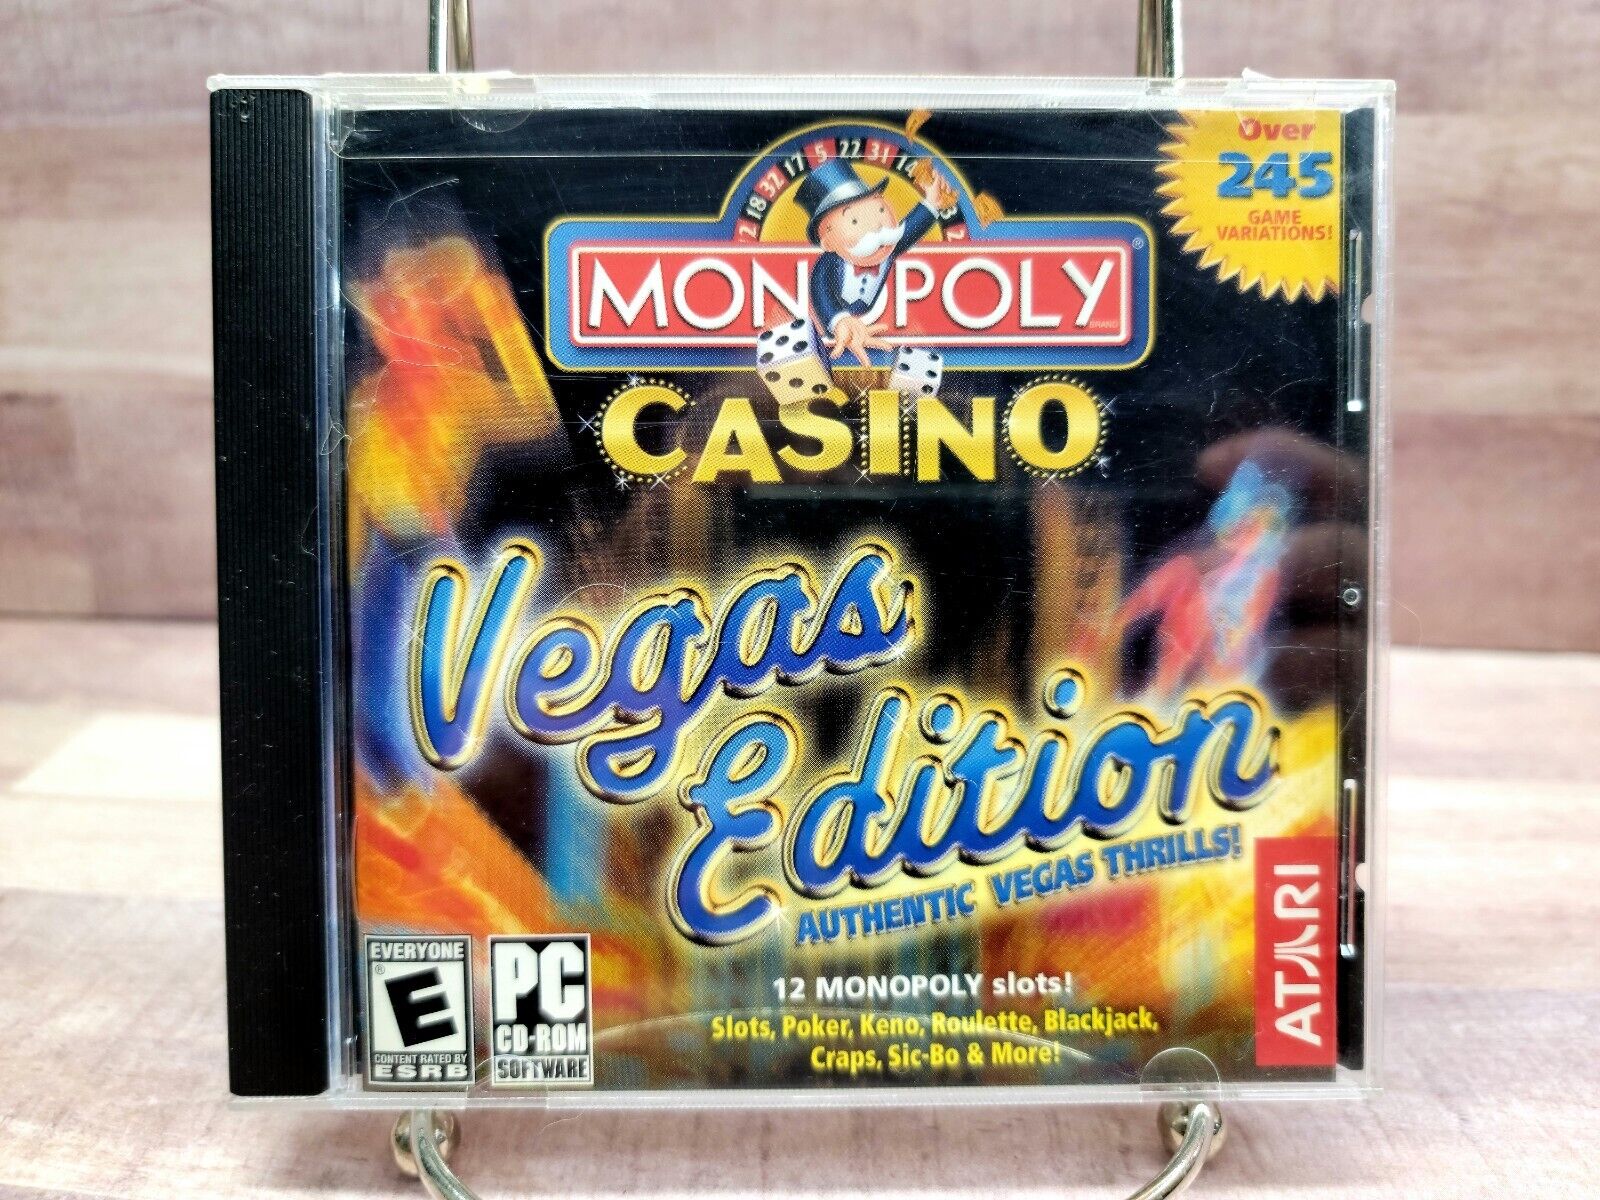 Monopoly Casino Vegas Edition Computer PC Game Slot Gamble 245 Variations 2001